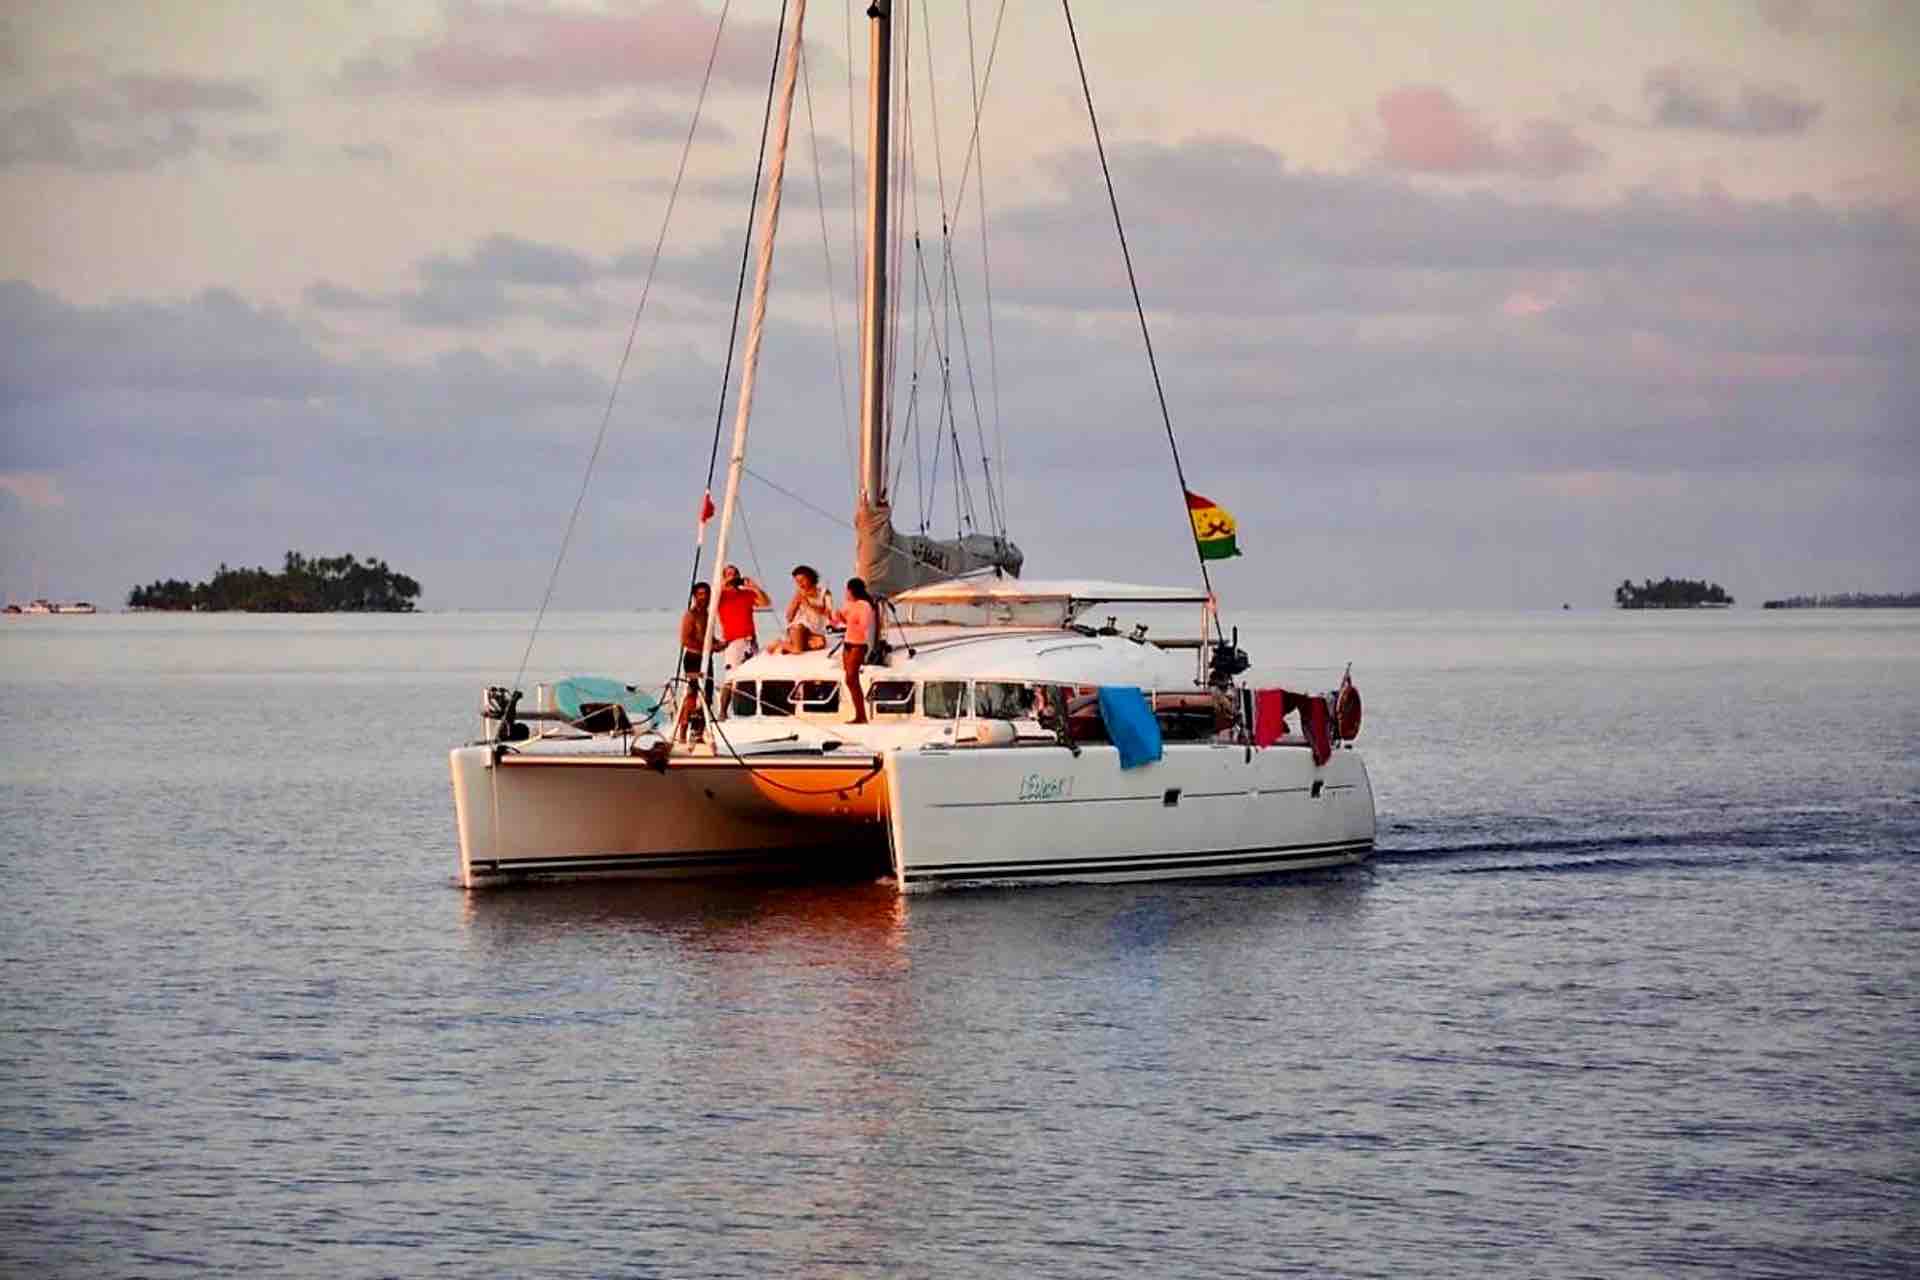 L'Eclektic II catamaran sailing with guests